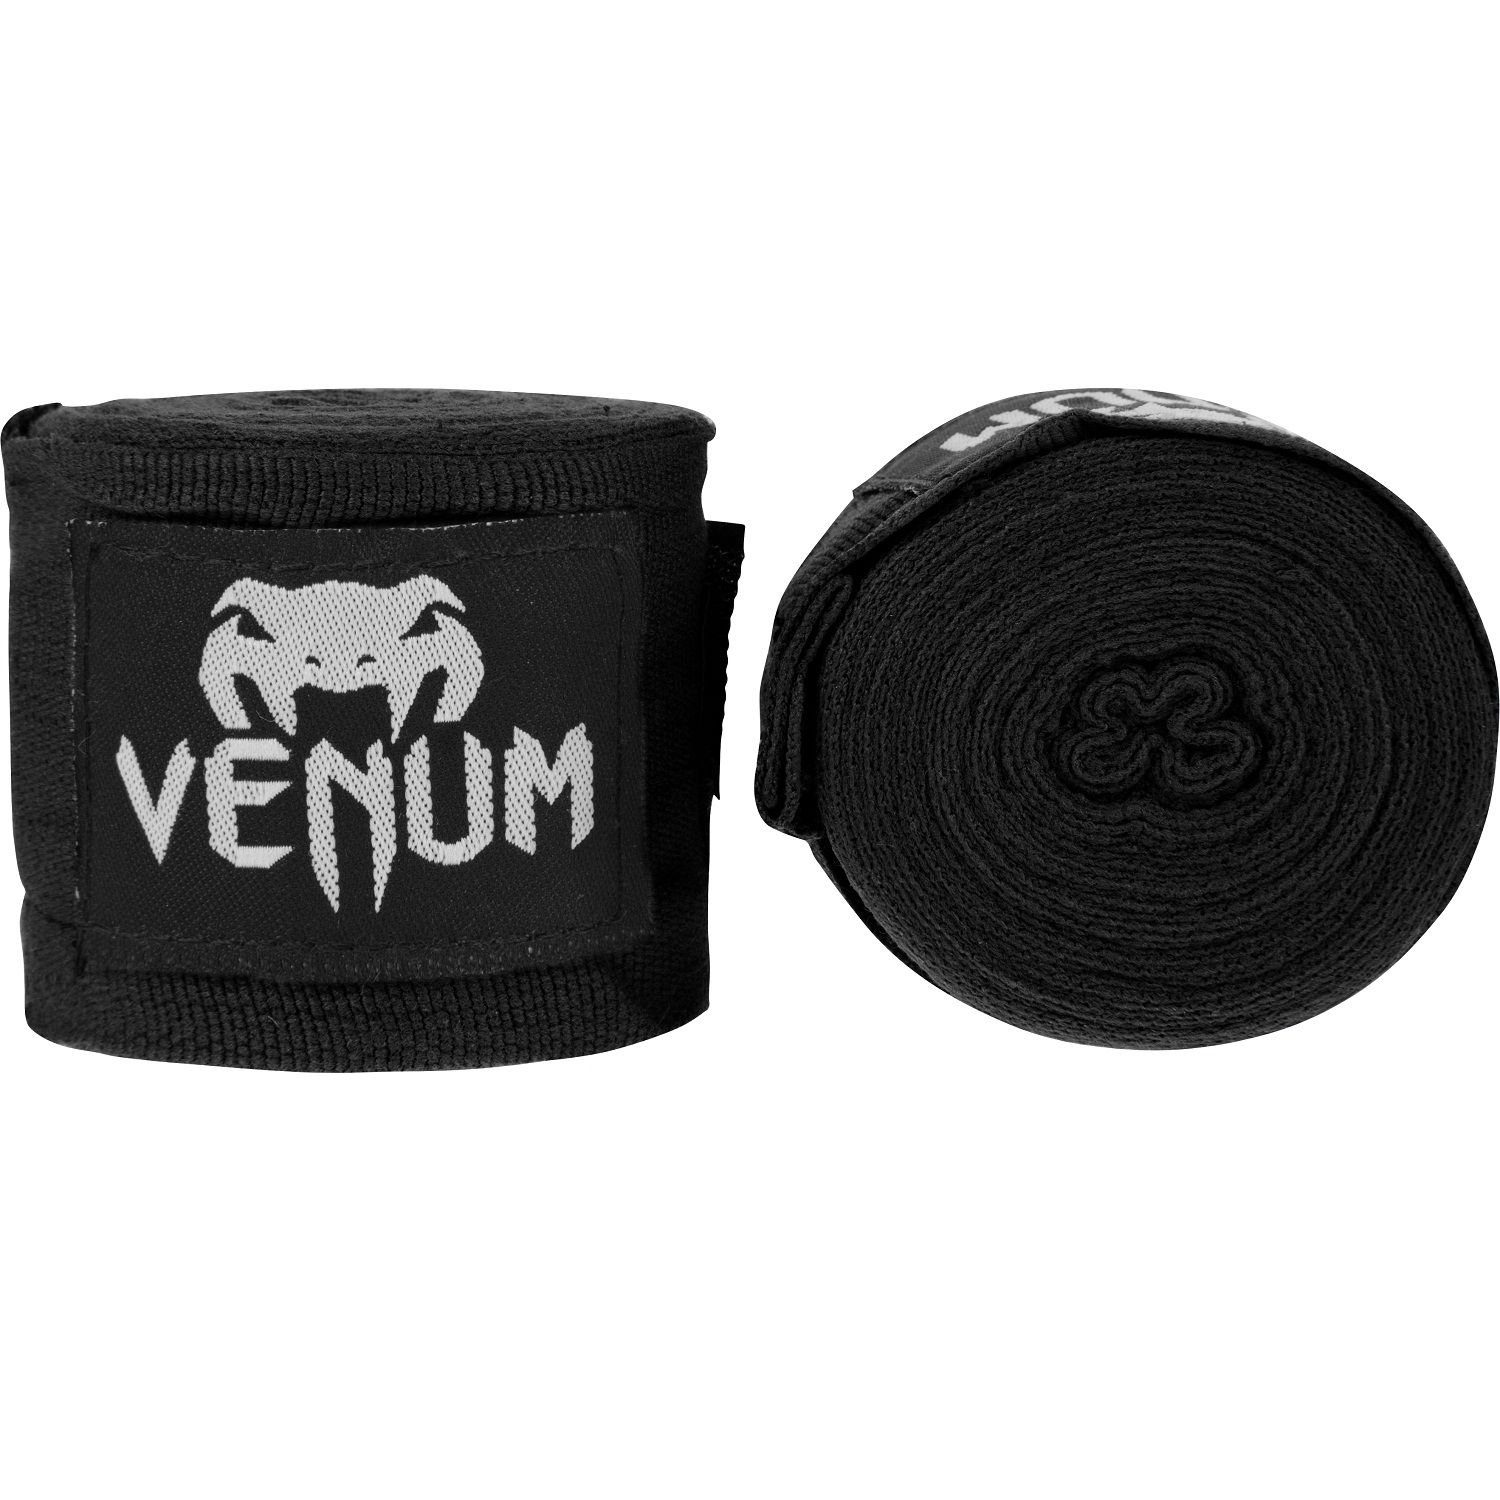 acheter Venum Bandages de Boxe Kontact G3obDL1WV mode